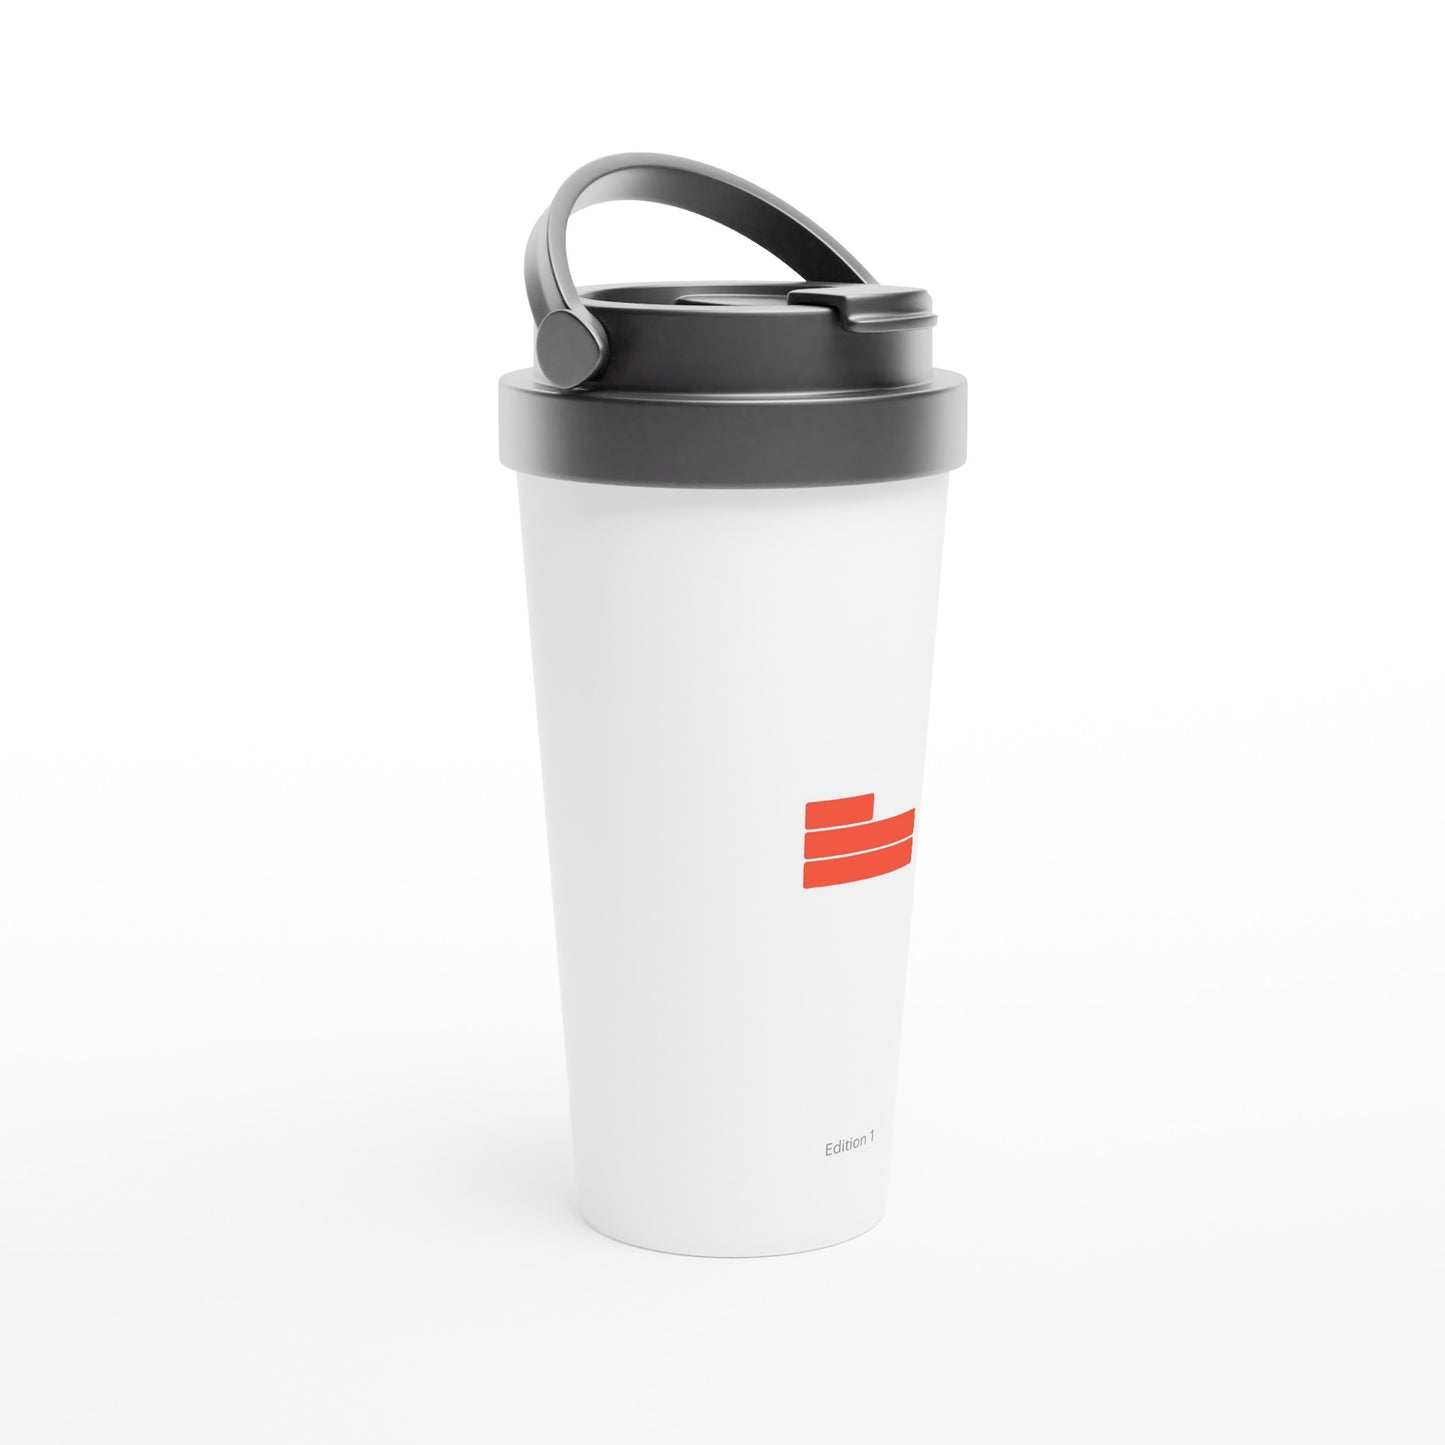 Limited Edition: Minimalist Brand - White 15oz Stainless Steel Travel Mug